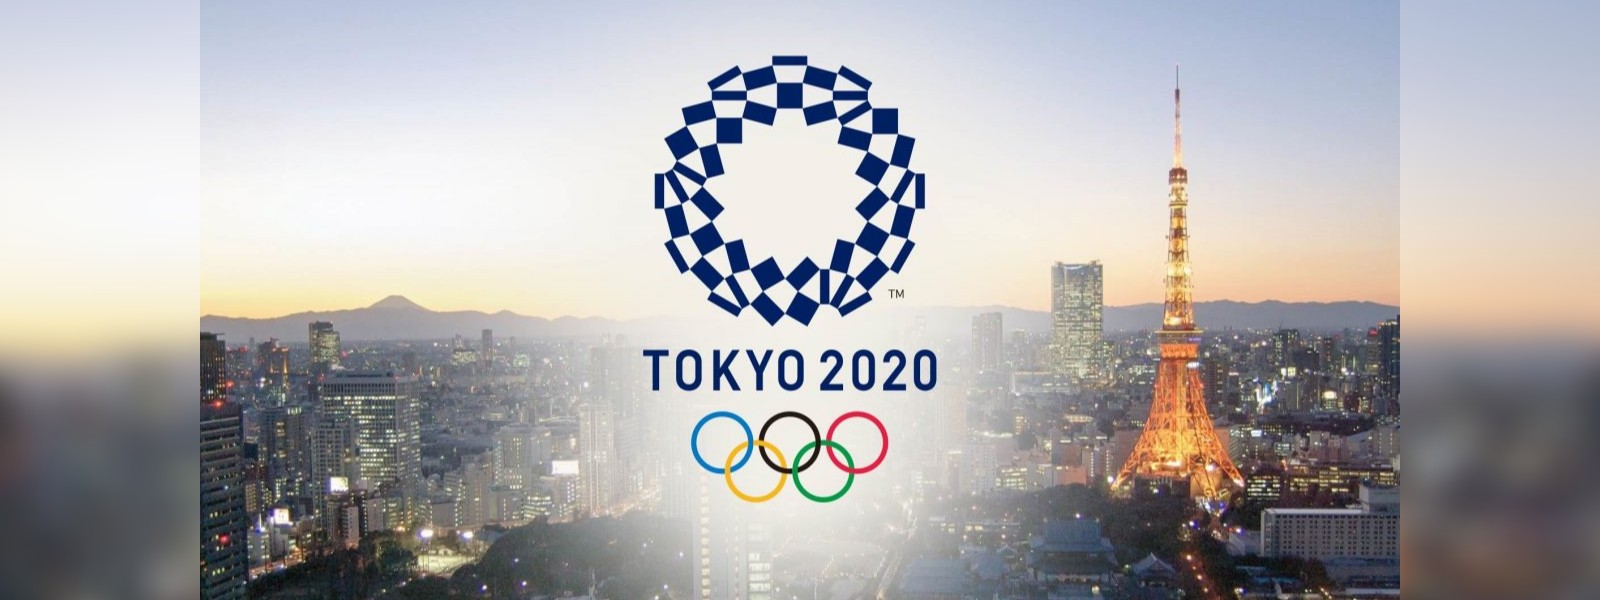 c. mirabai olympic games tokyo 2020